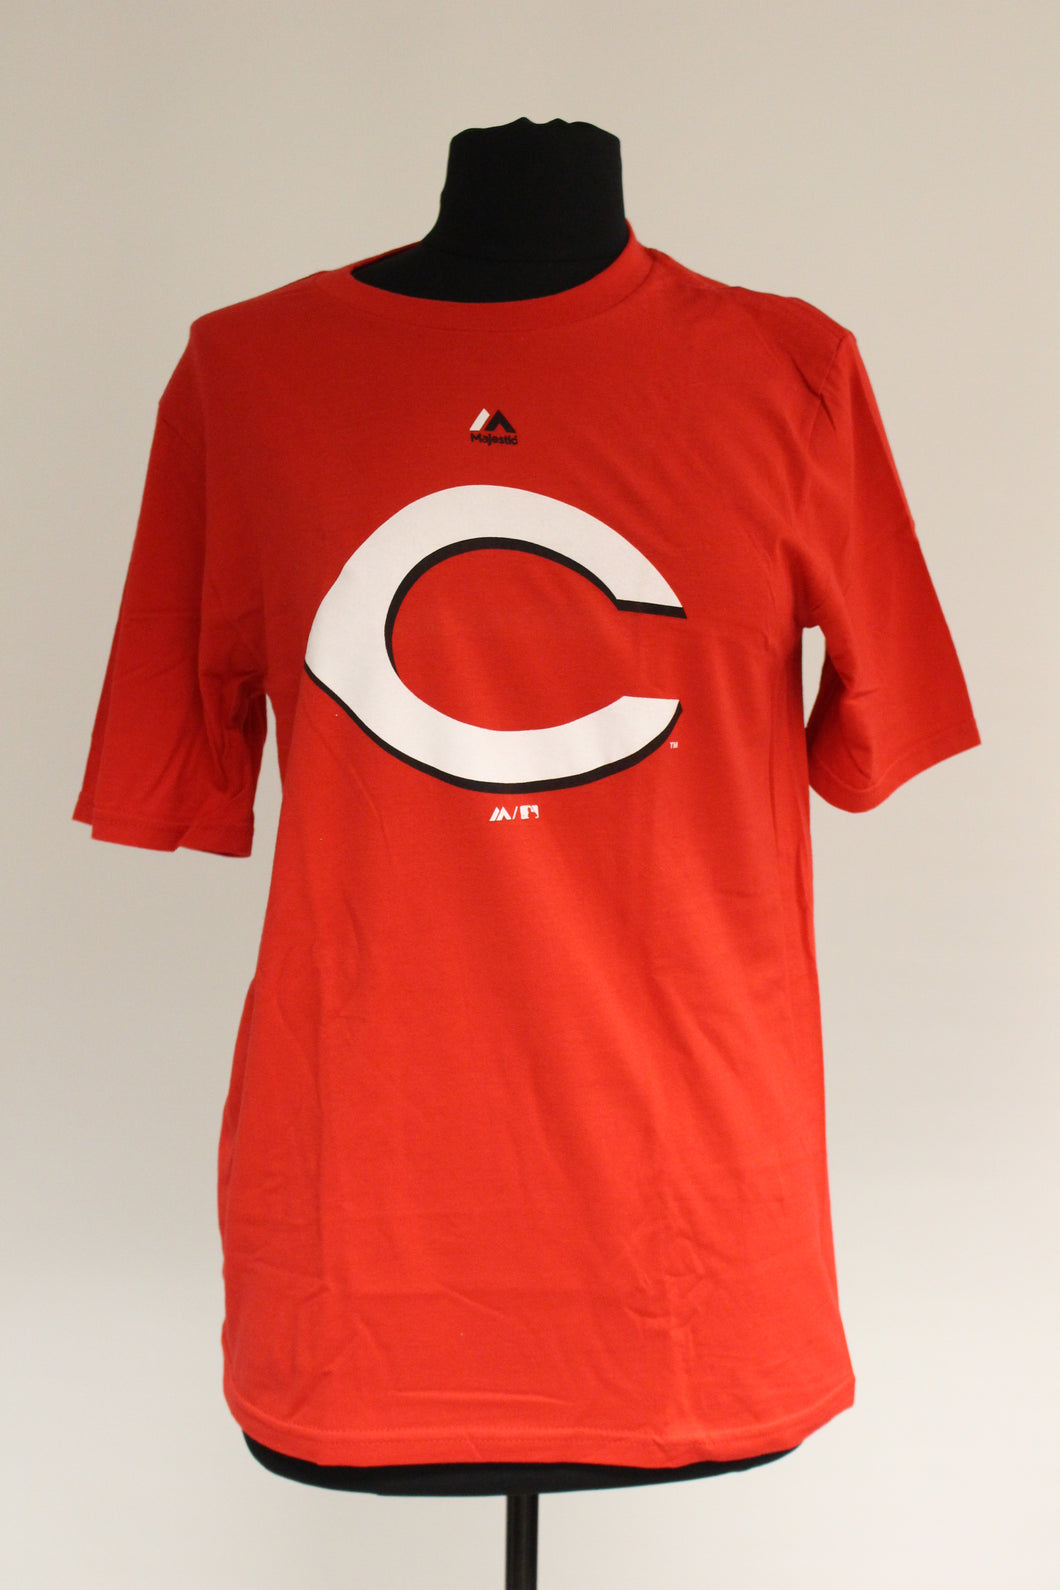 Cincinnati Reds Youth t-Shirt, Size: XL (18-20), New!